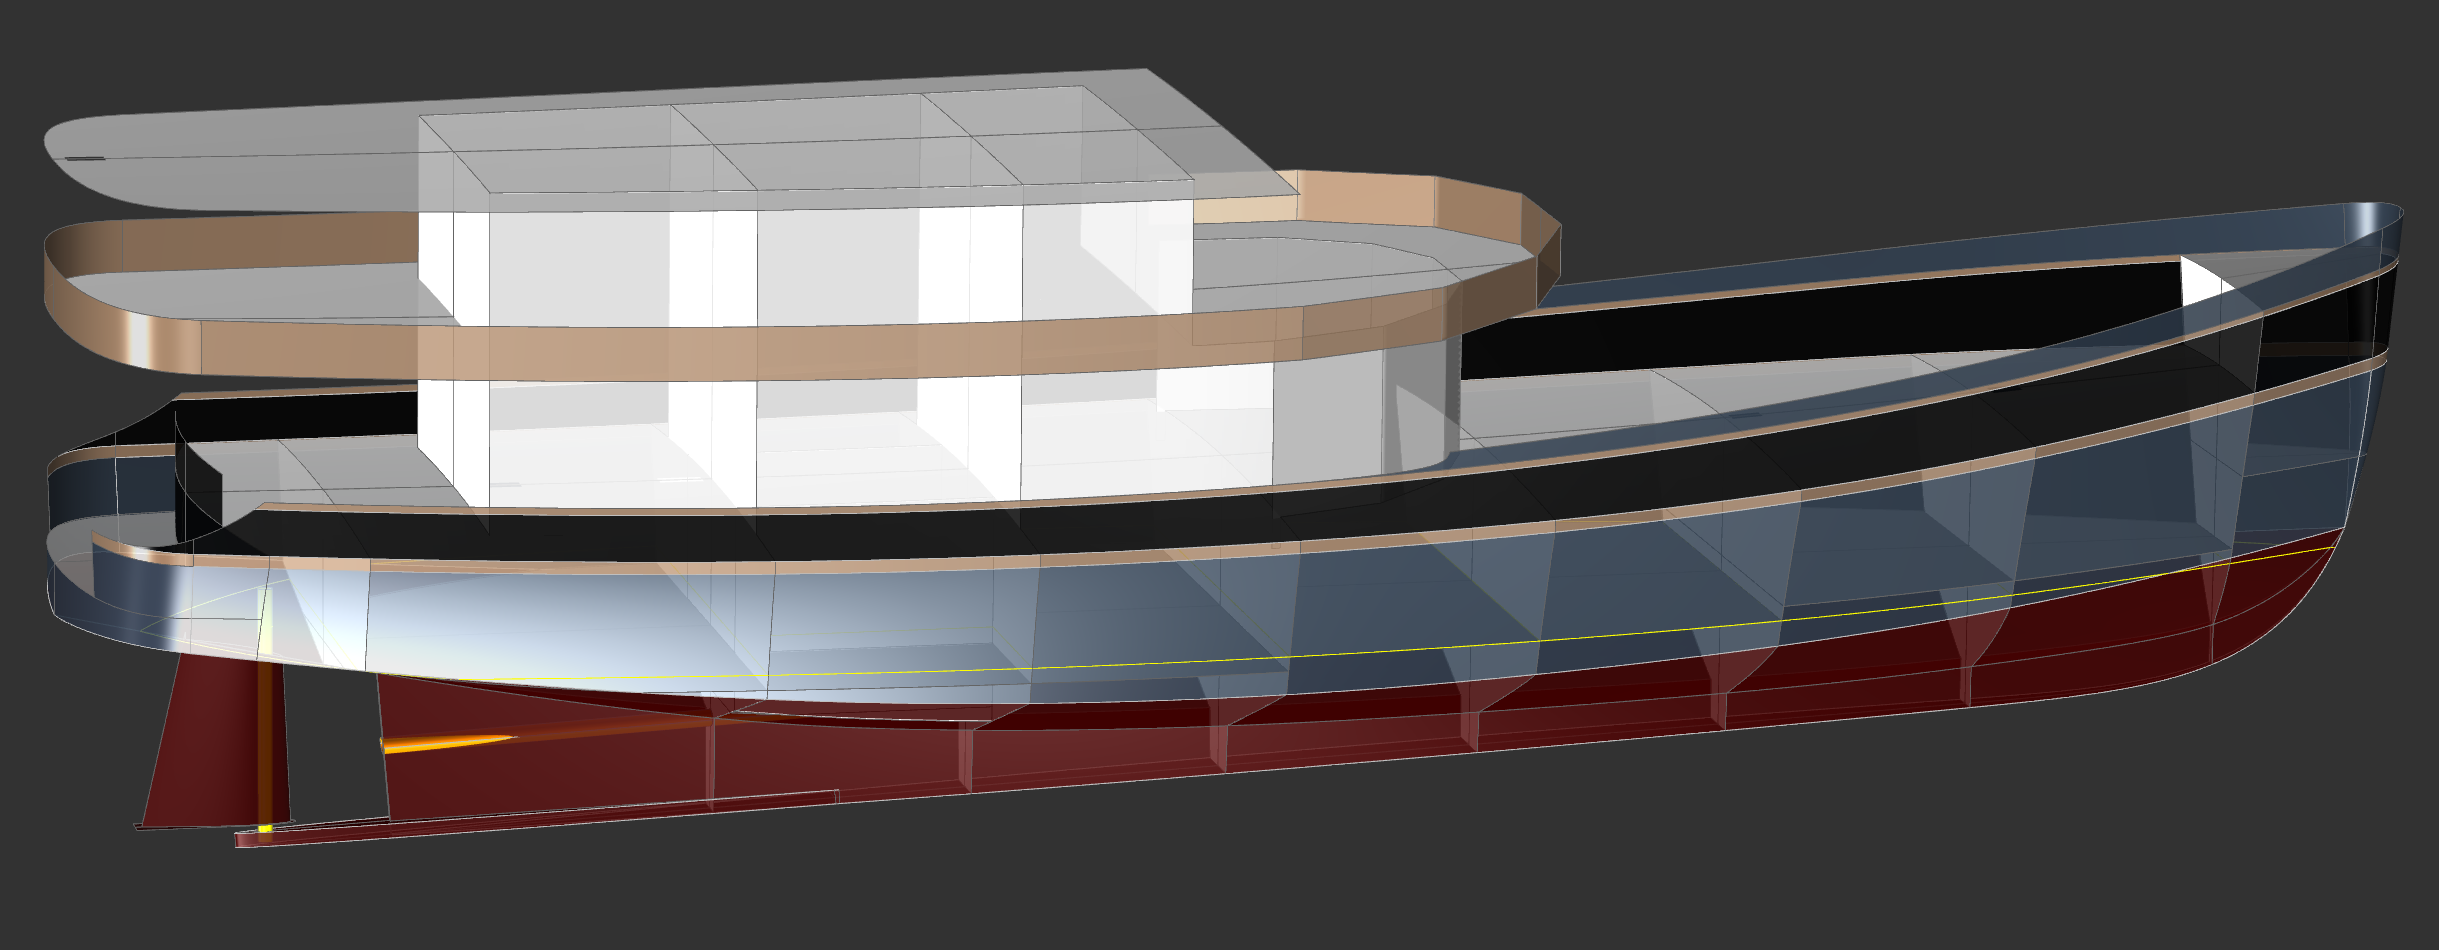 121' Dive Charter Yacht - PERI LAUT - Kasten Marine Design, Inc.